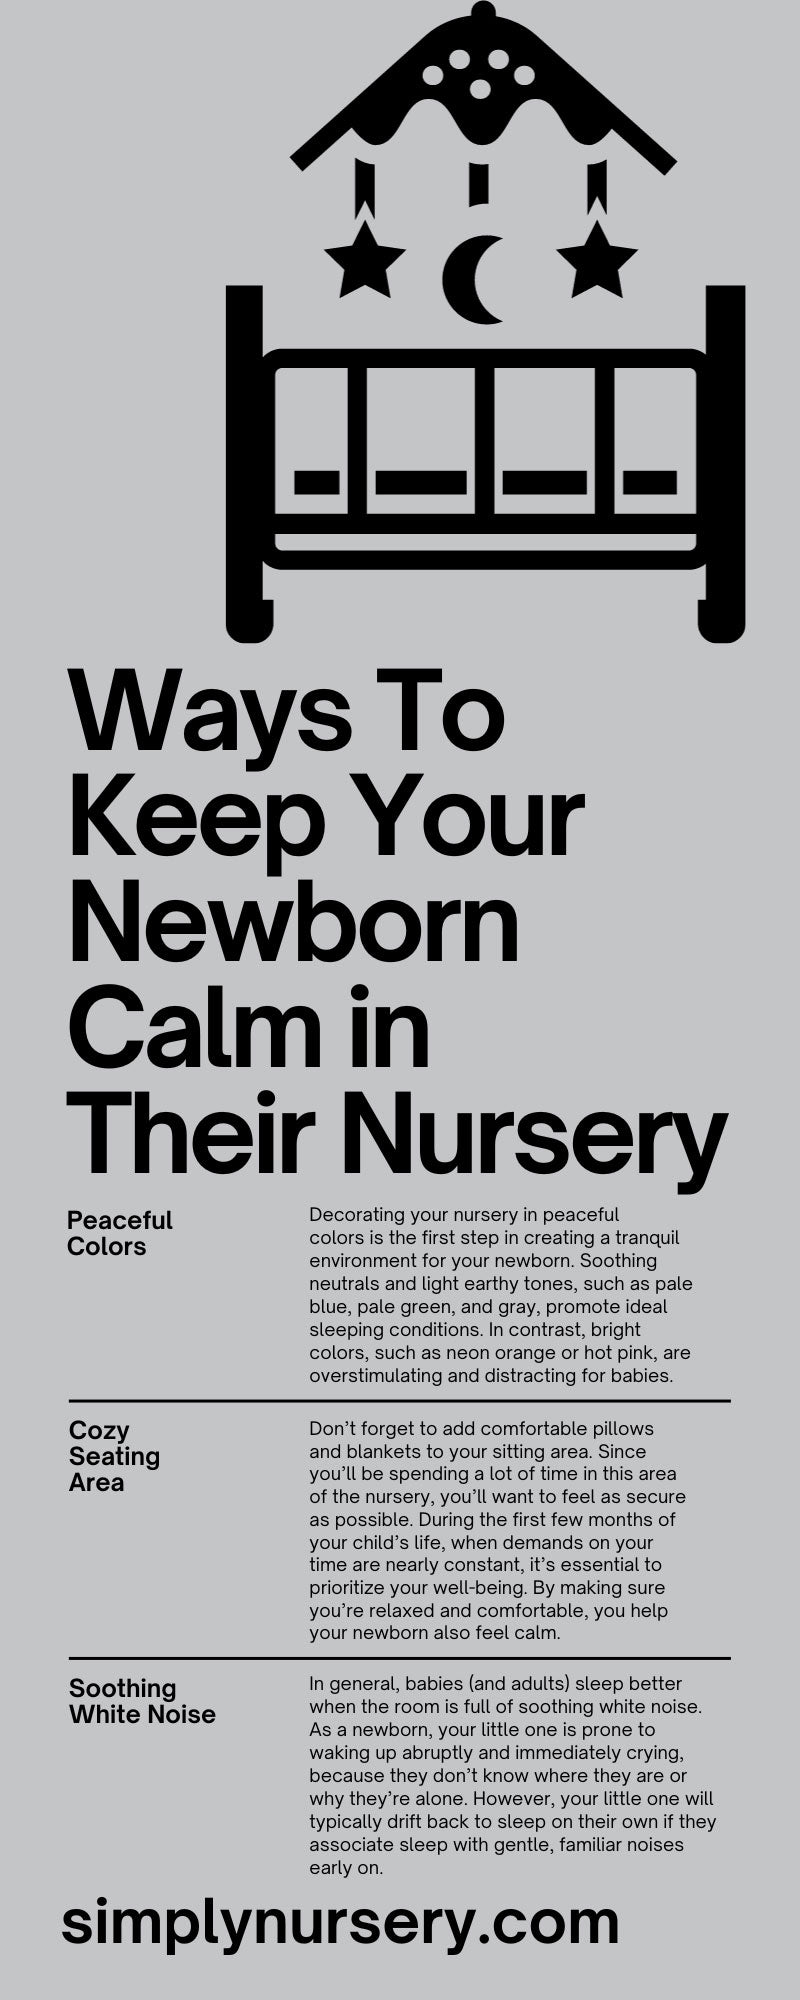 Ways To Keep Your Newborn Calm in Their Nursery